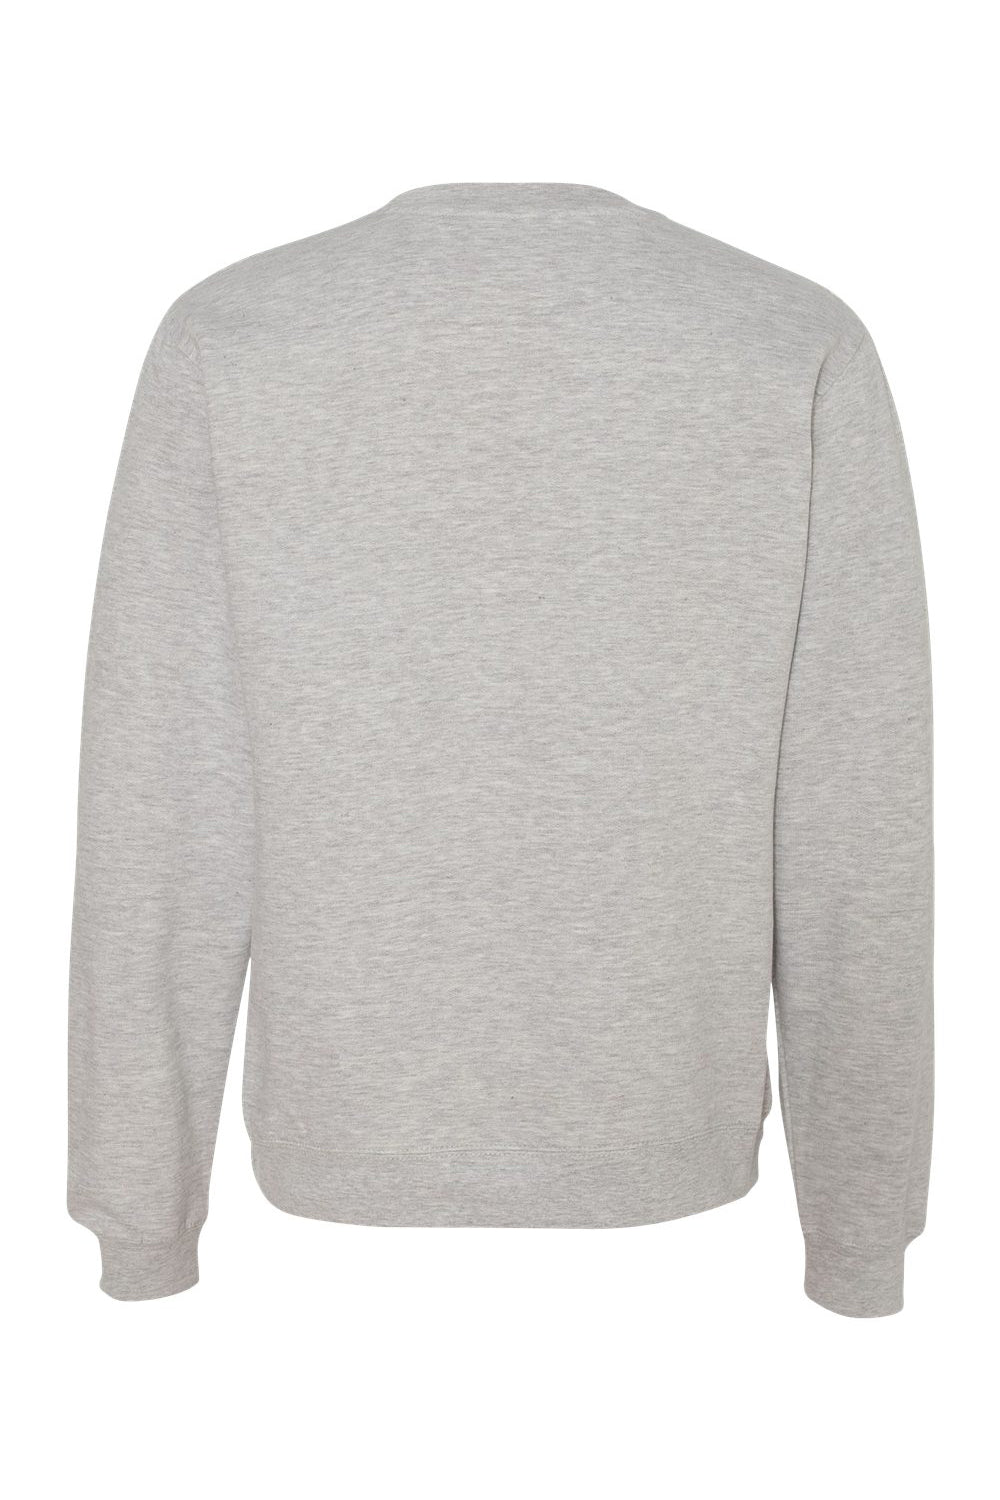 Independent Trading Co. SS3000 Mens Crewneck Sweatshirt Heather Grey Flat Back